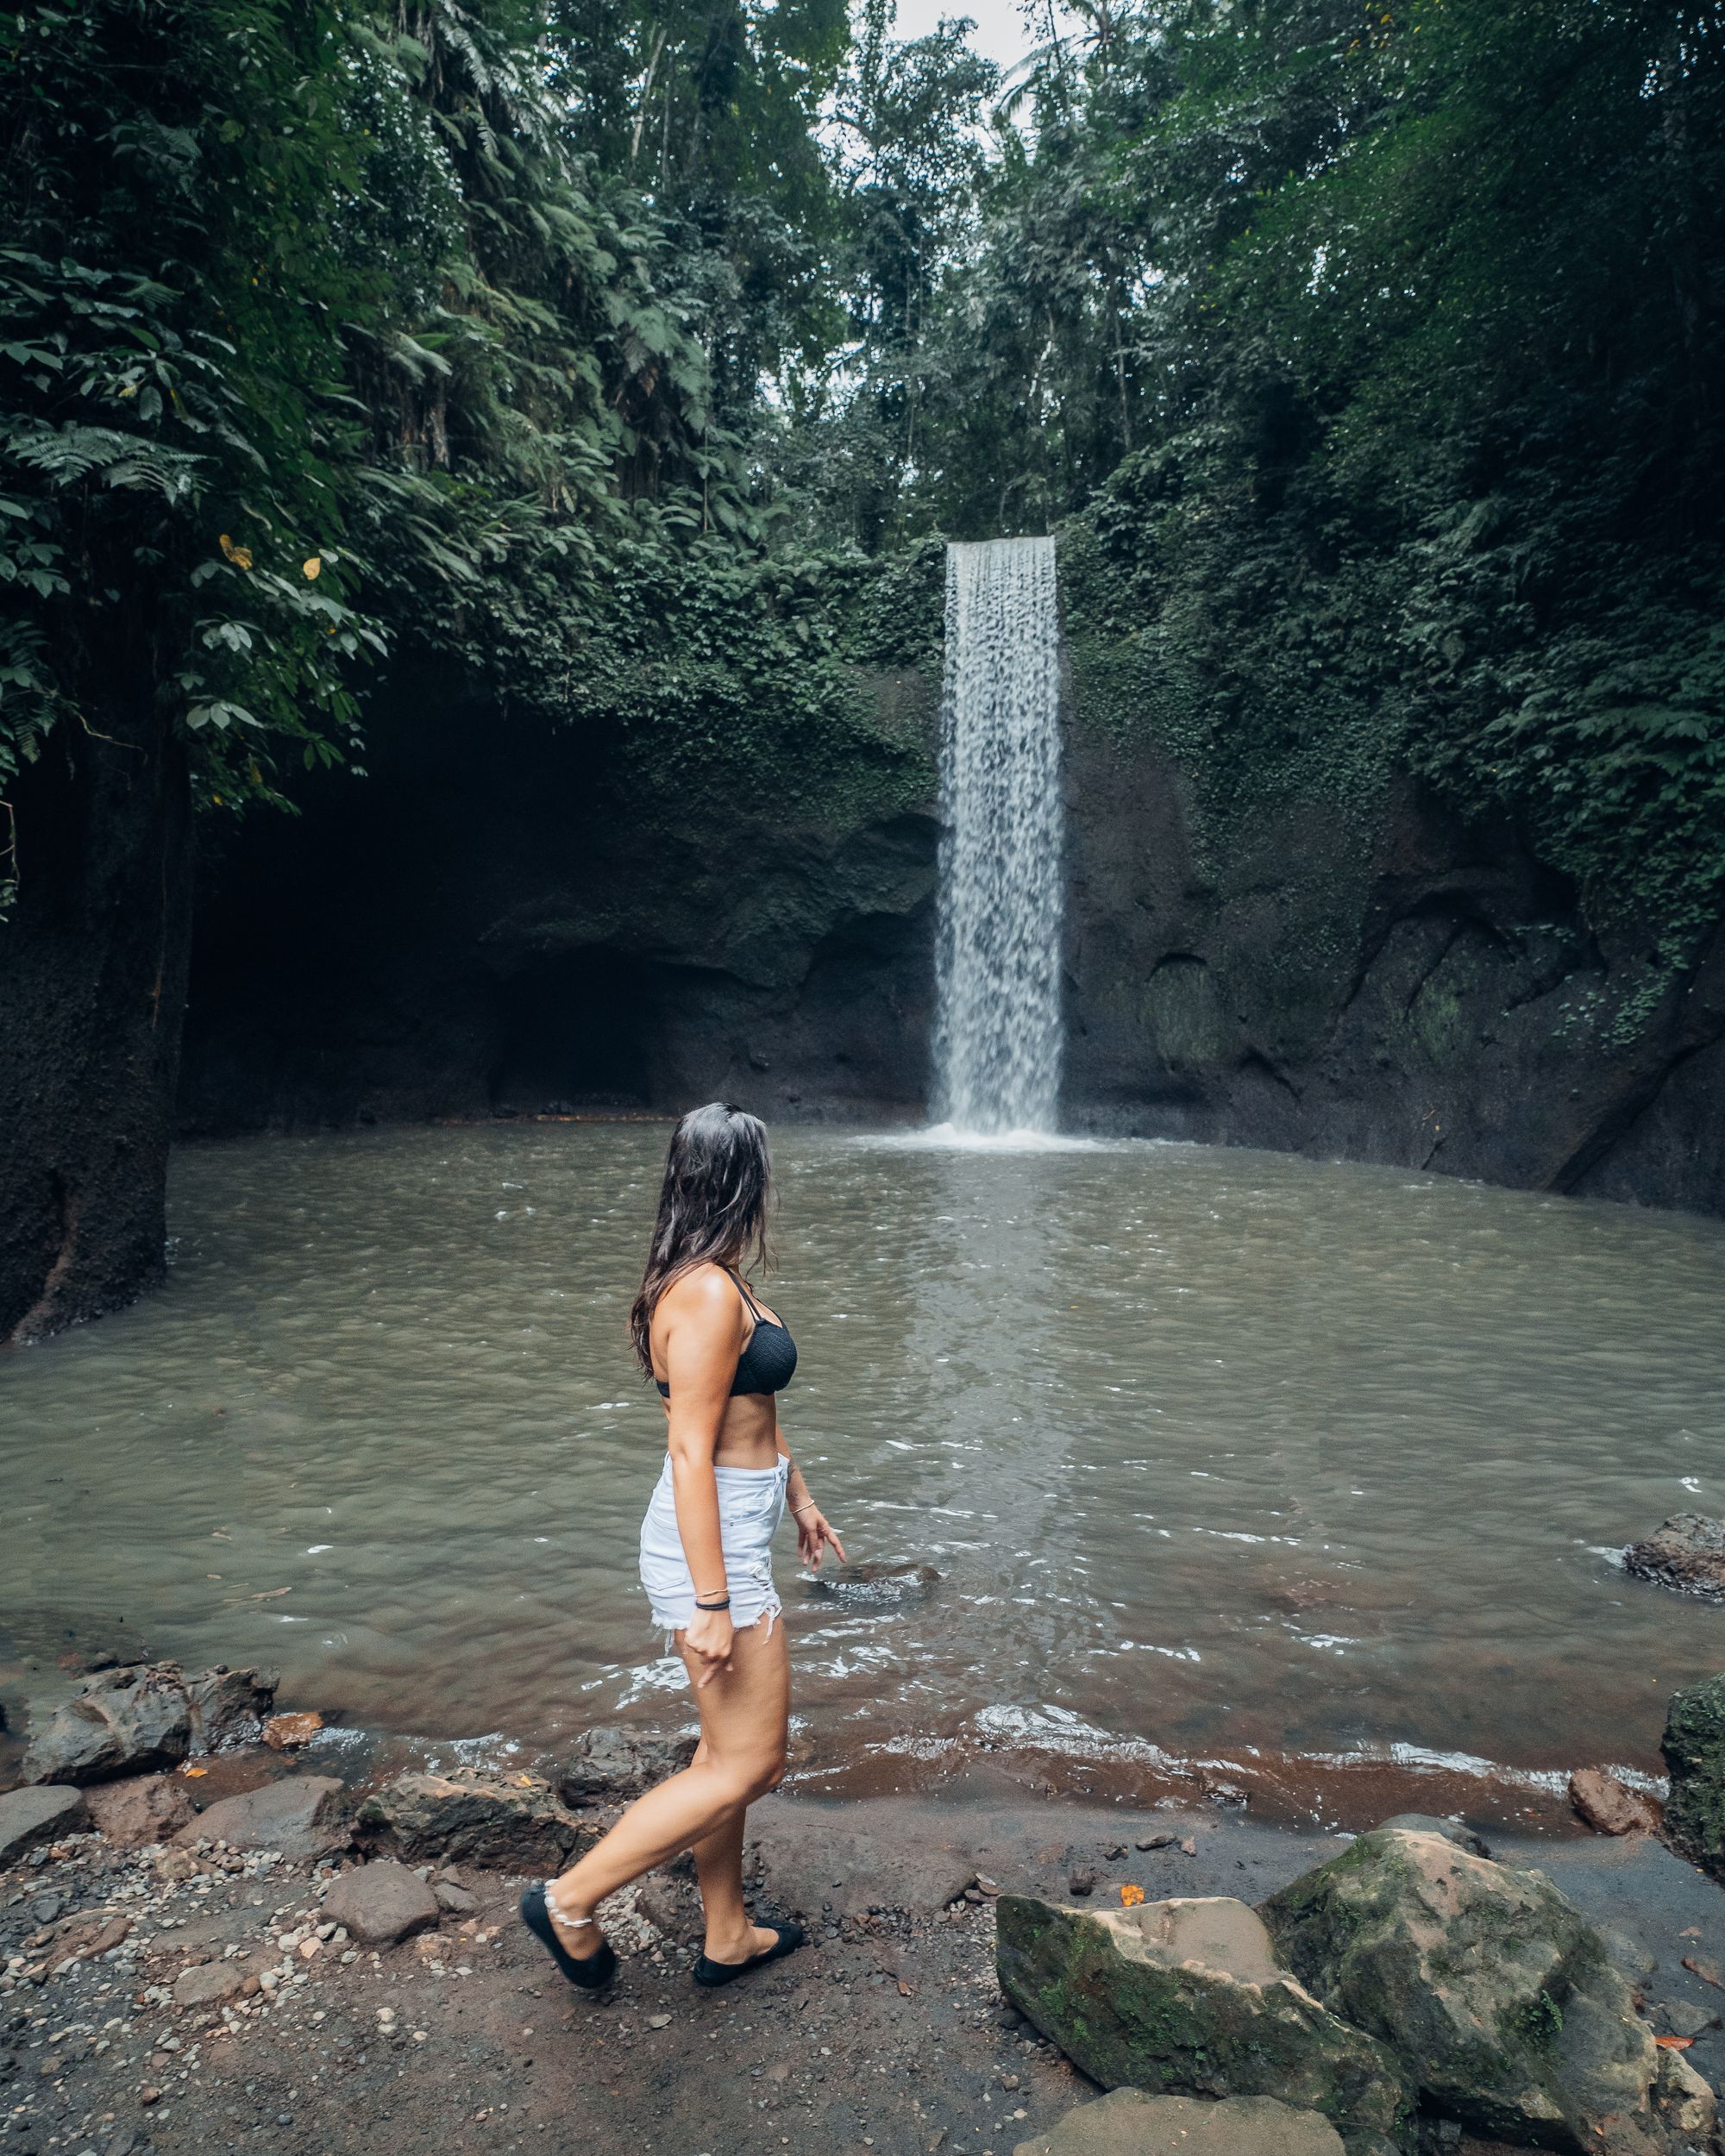 Tibumana Wasserfall: Erfrischender Badespaß in Balis Naturschatz